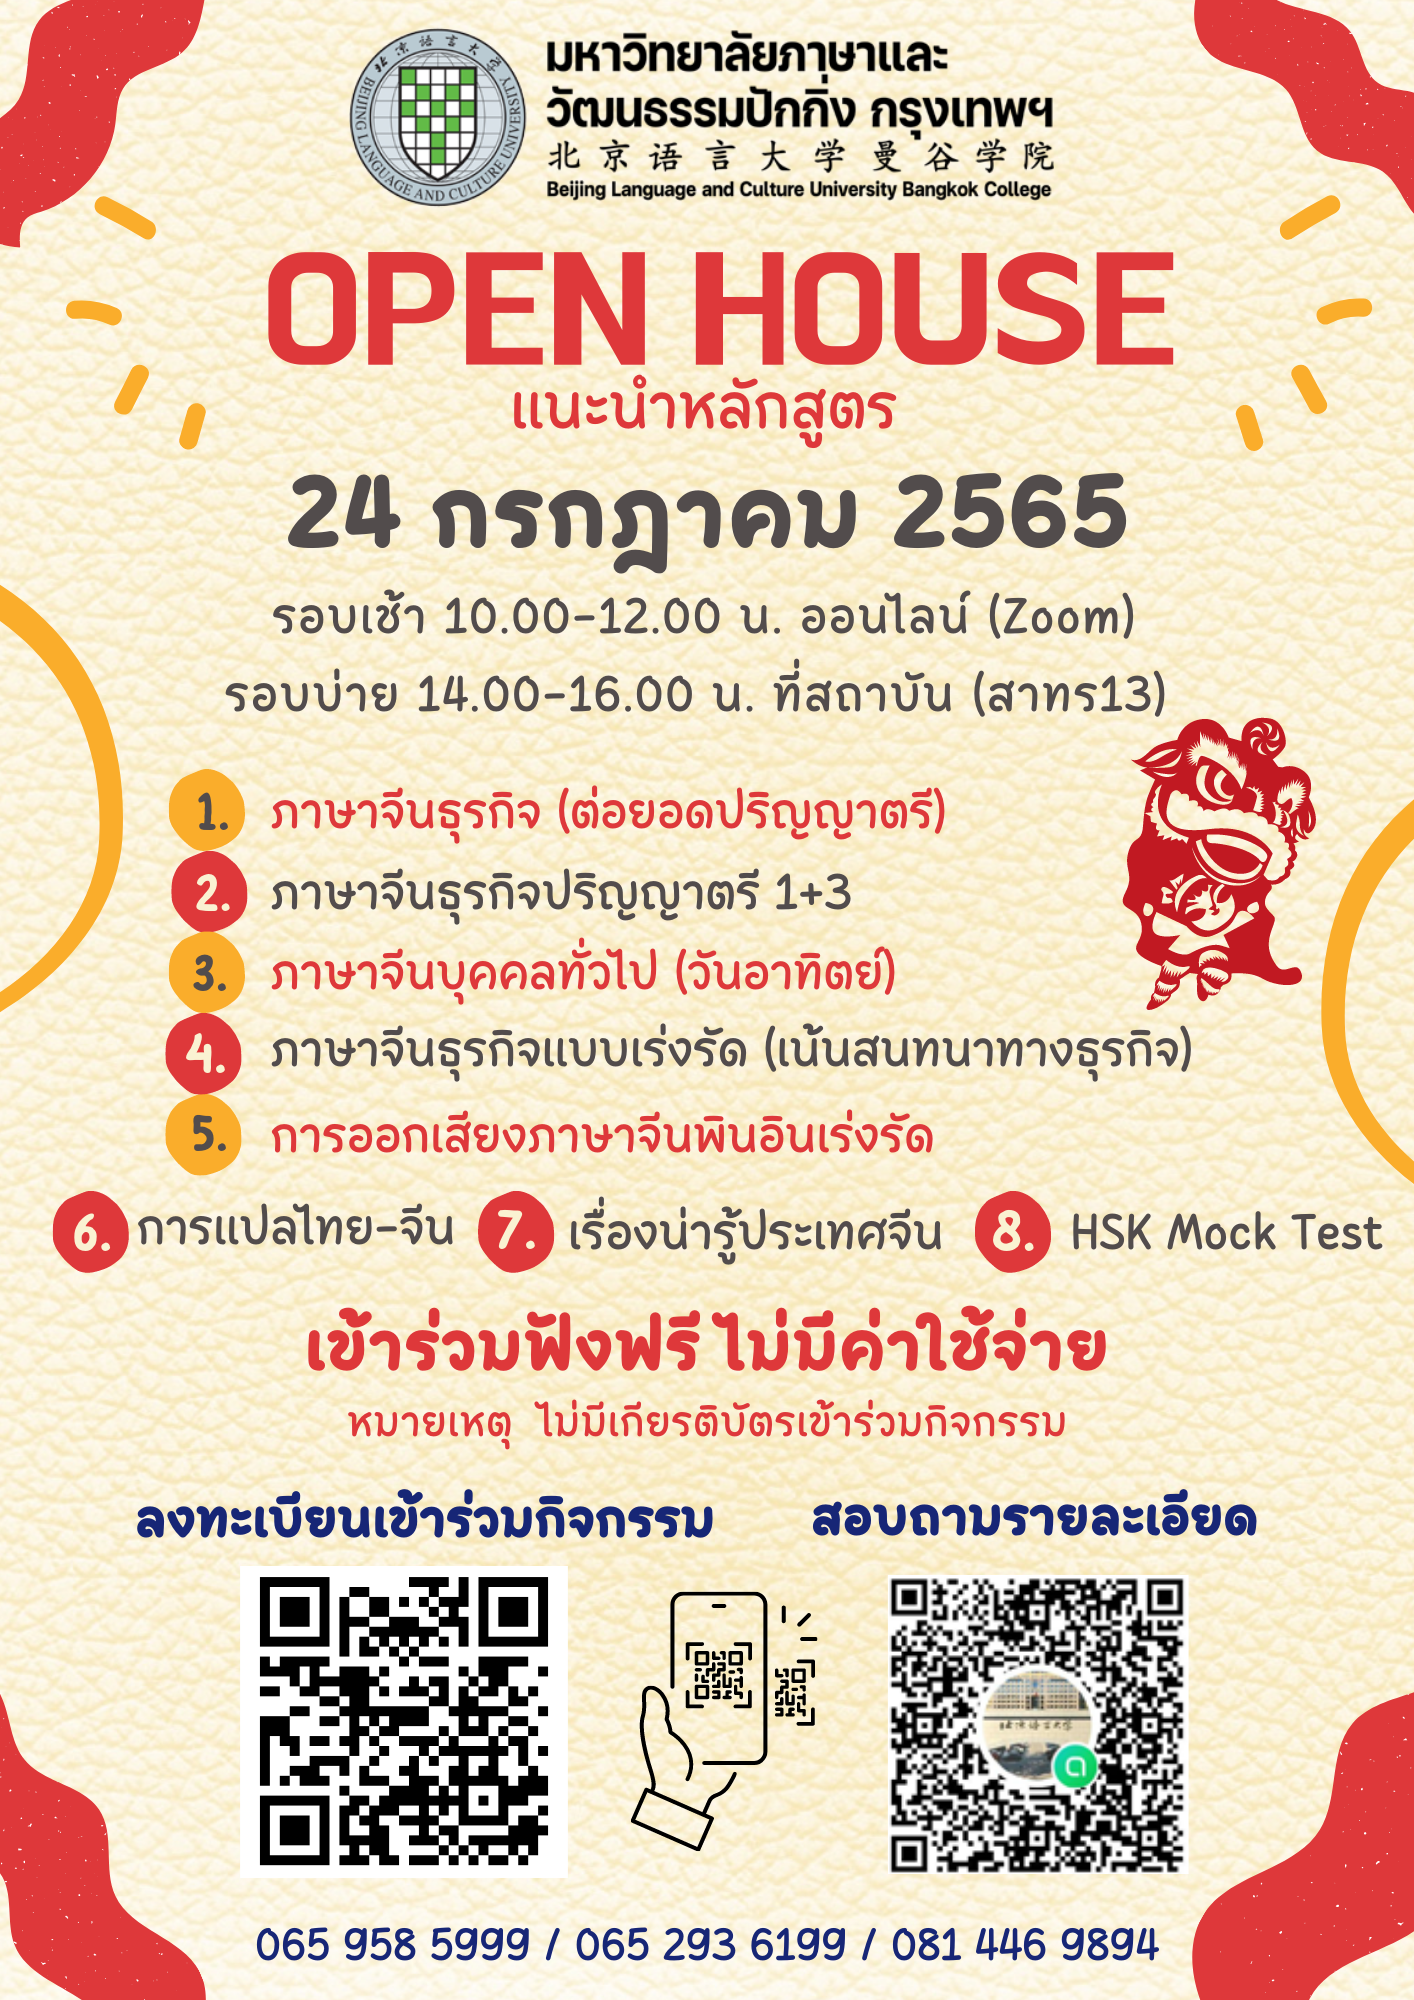 BLCU Bangkok จะจัดกิจกรรม Open House แนะนำหลักสูตร